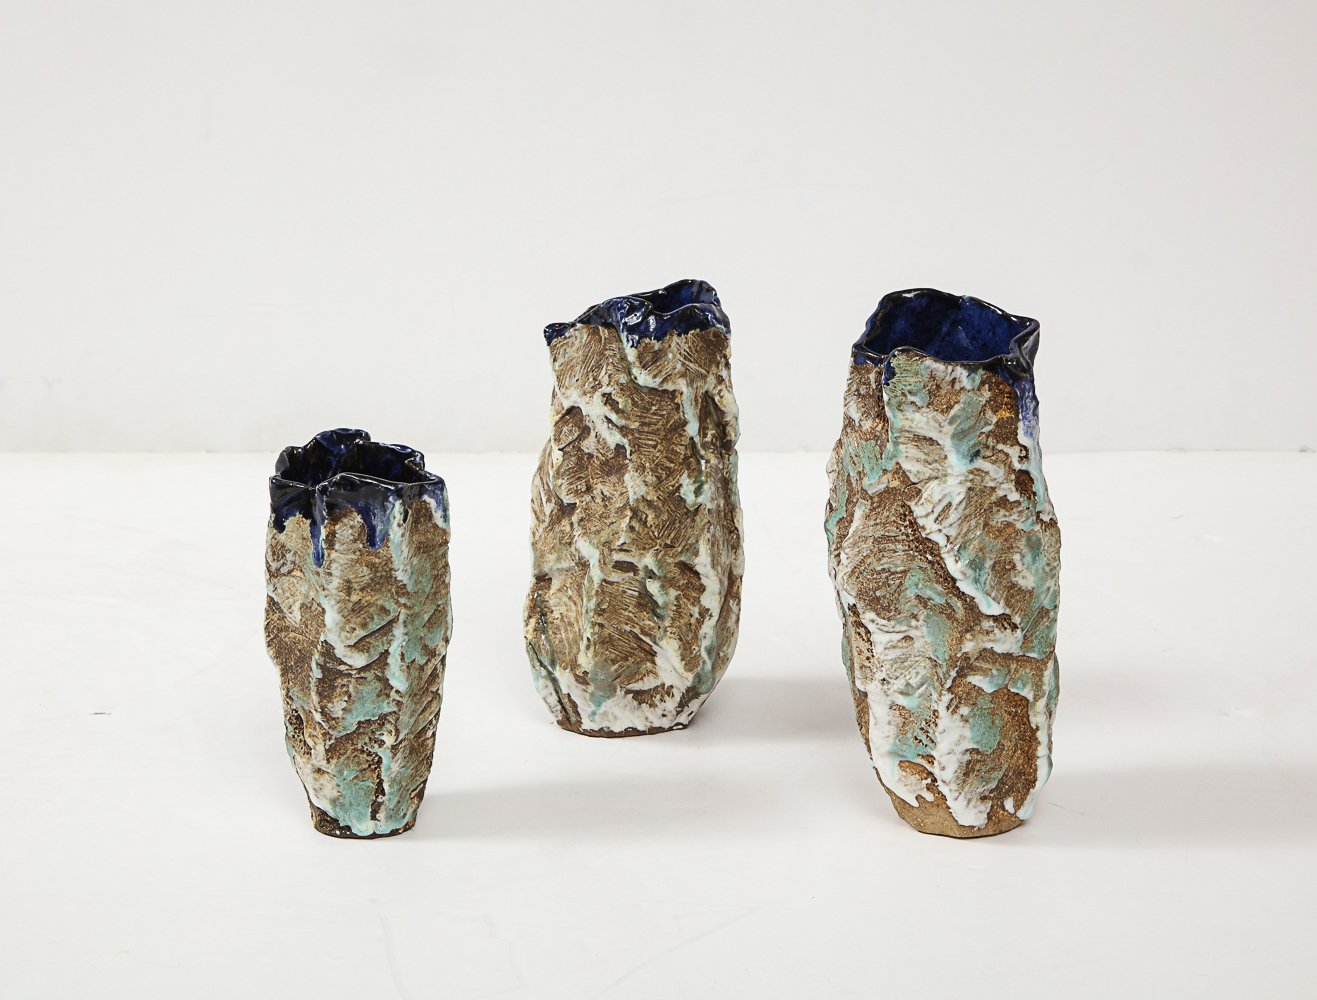 Vase with Blue Interior #4 by Dena Zemsky